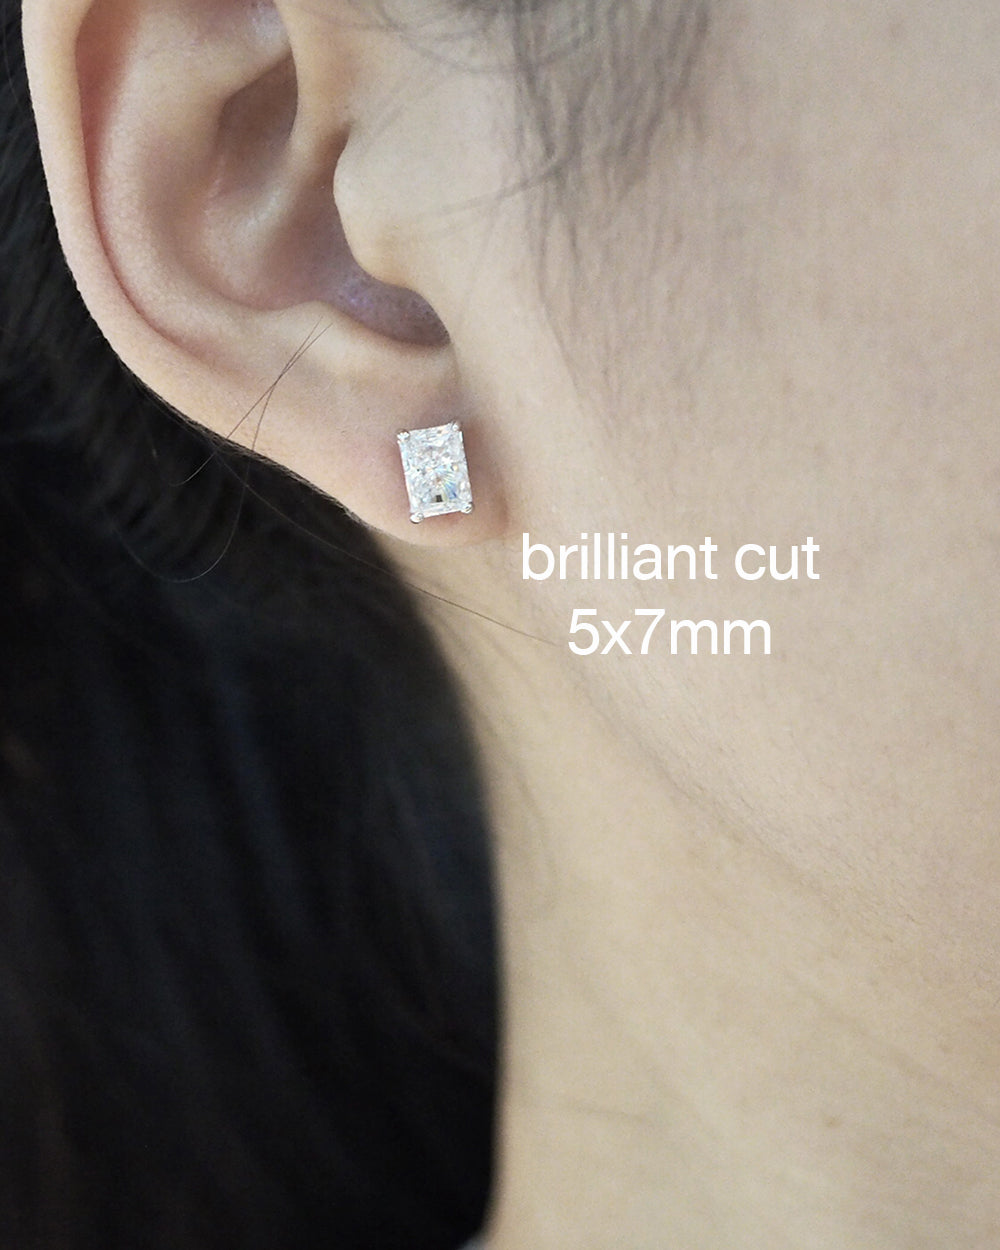 Glintz Bijoux Bisou Brilliant Cut Studs 5x7mm Earrings